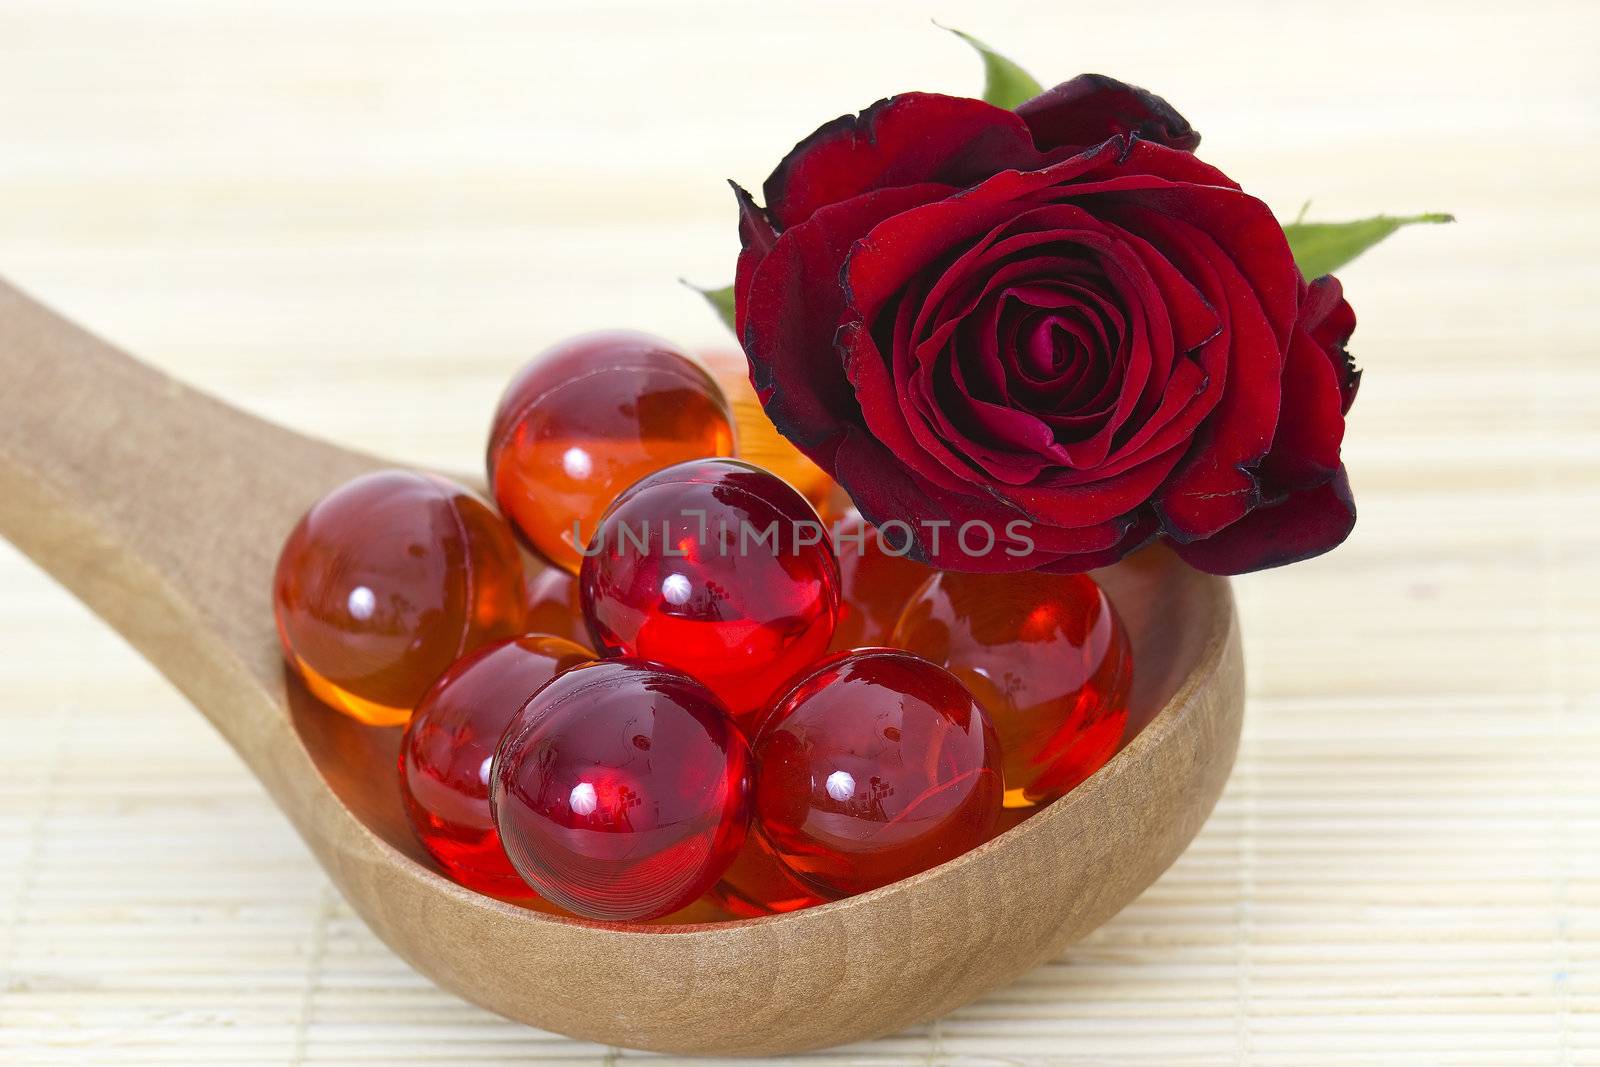 oil bath pearls and fresh rose